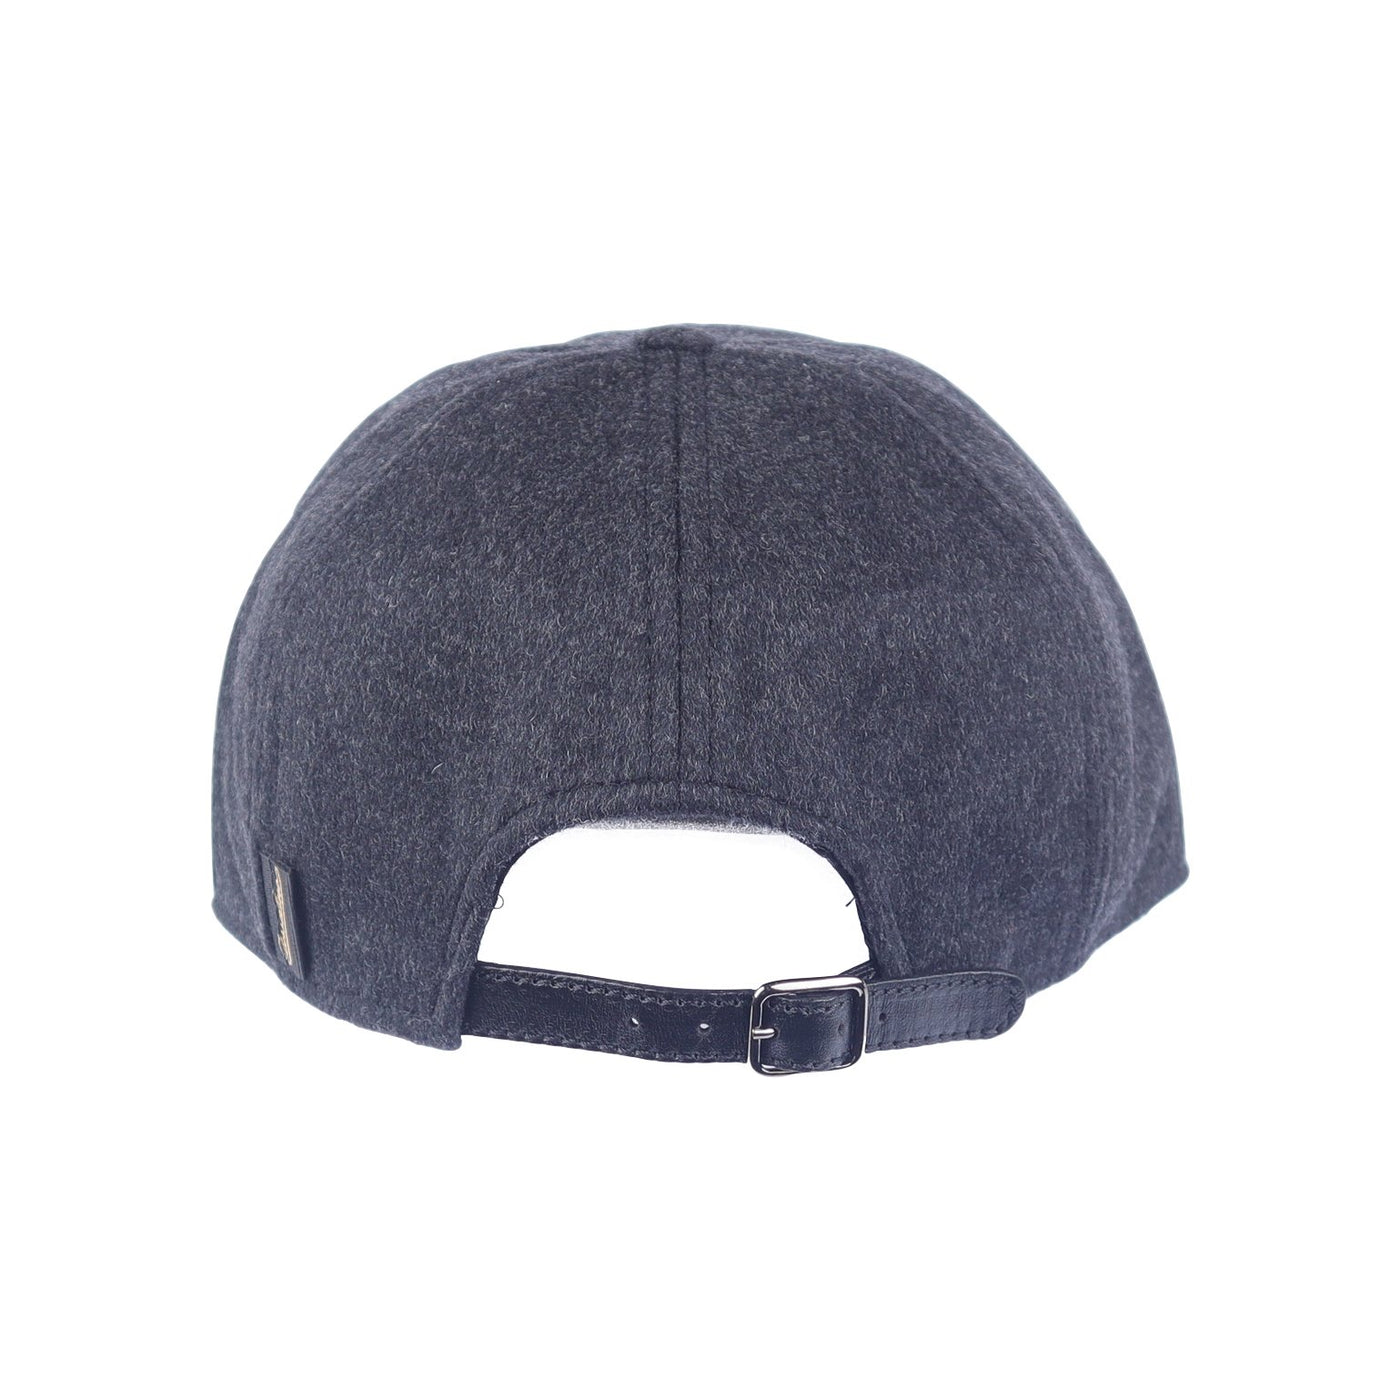 Lana Wool Cap - Charcoal, product_type] - Borsalino for Atica fedora hat